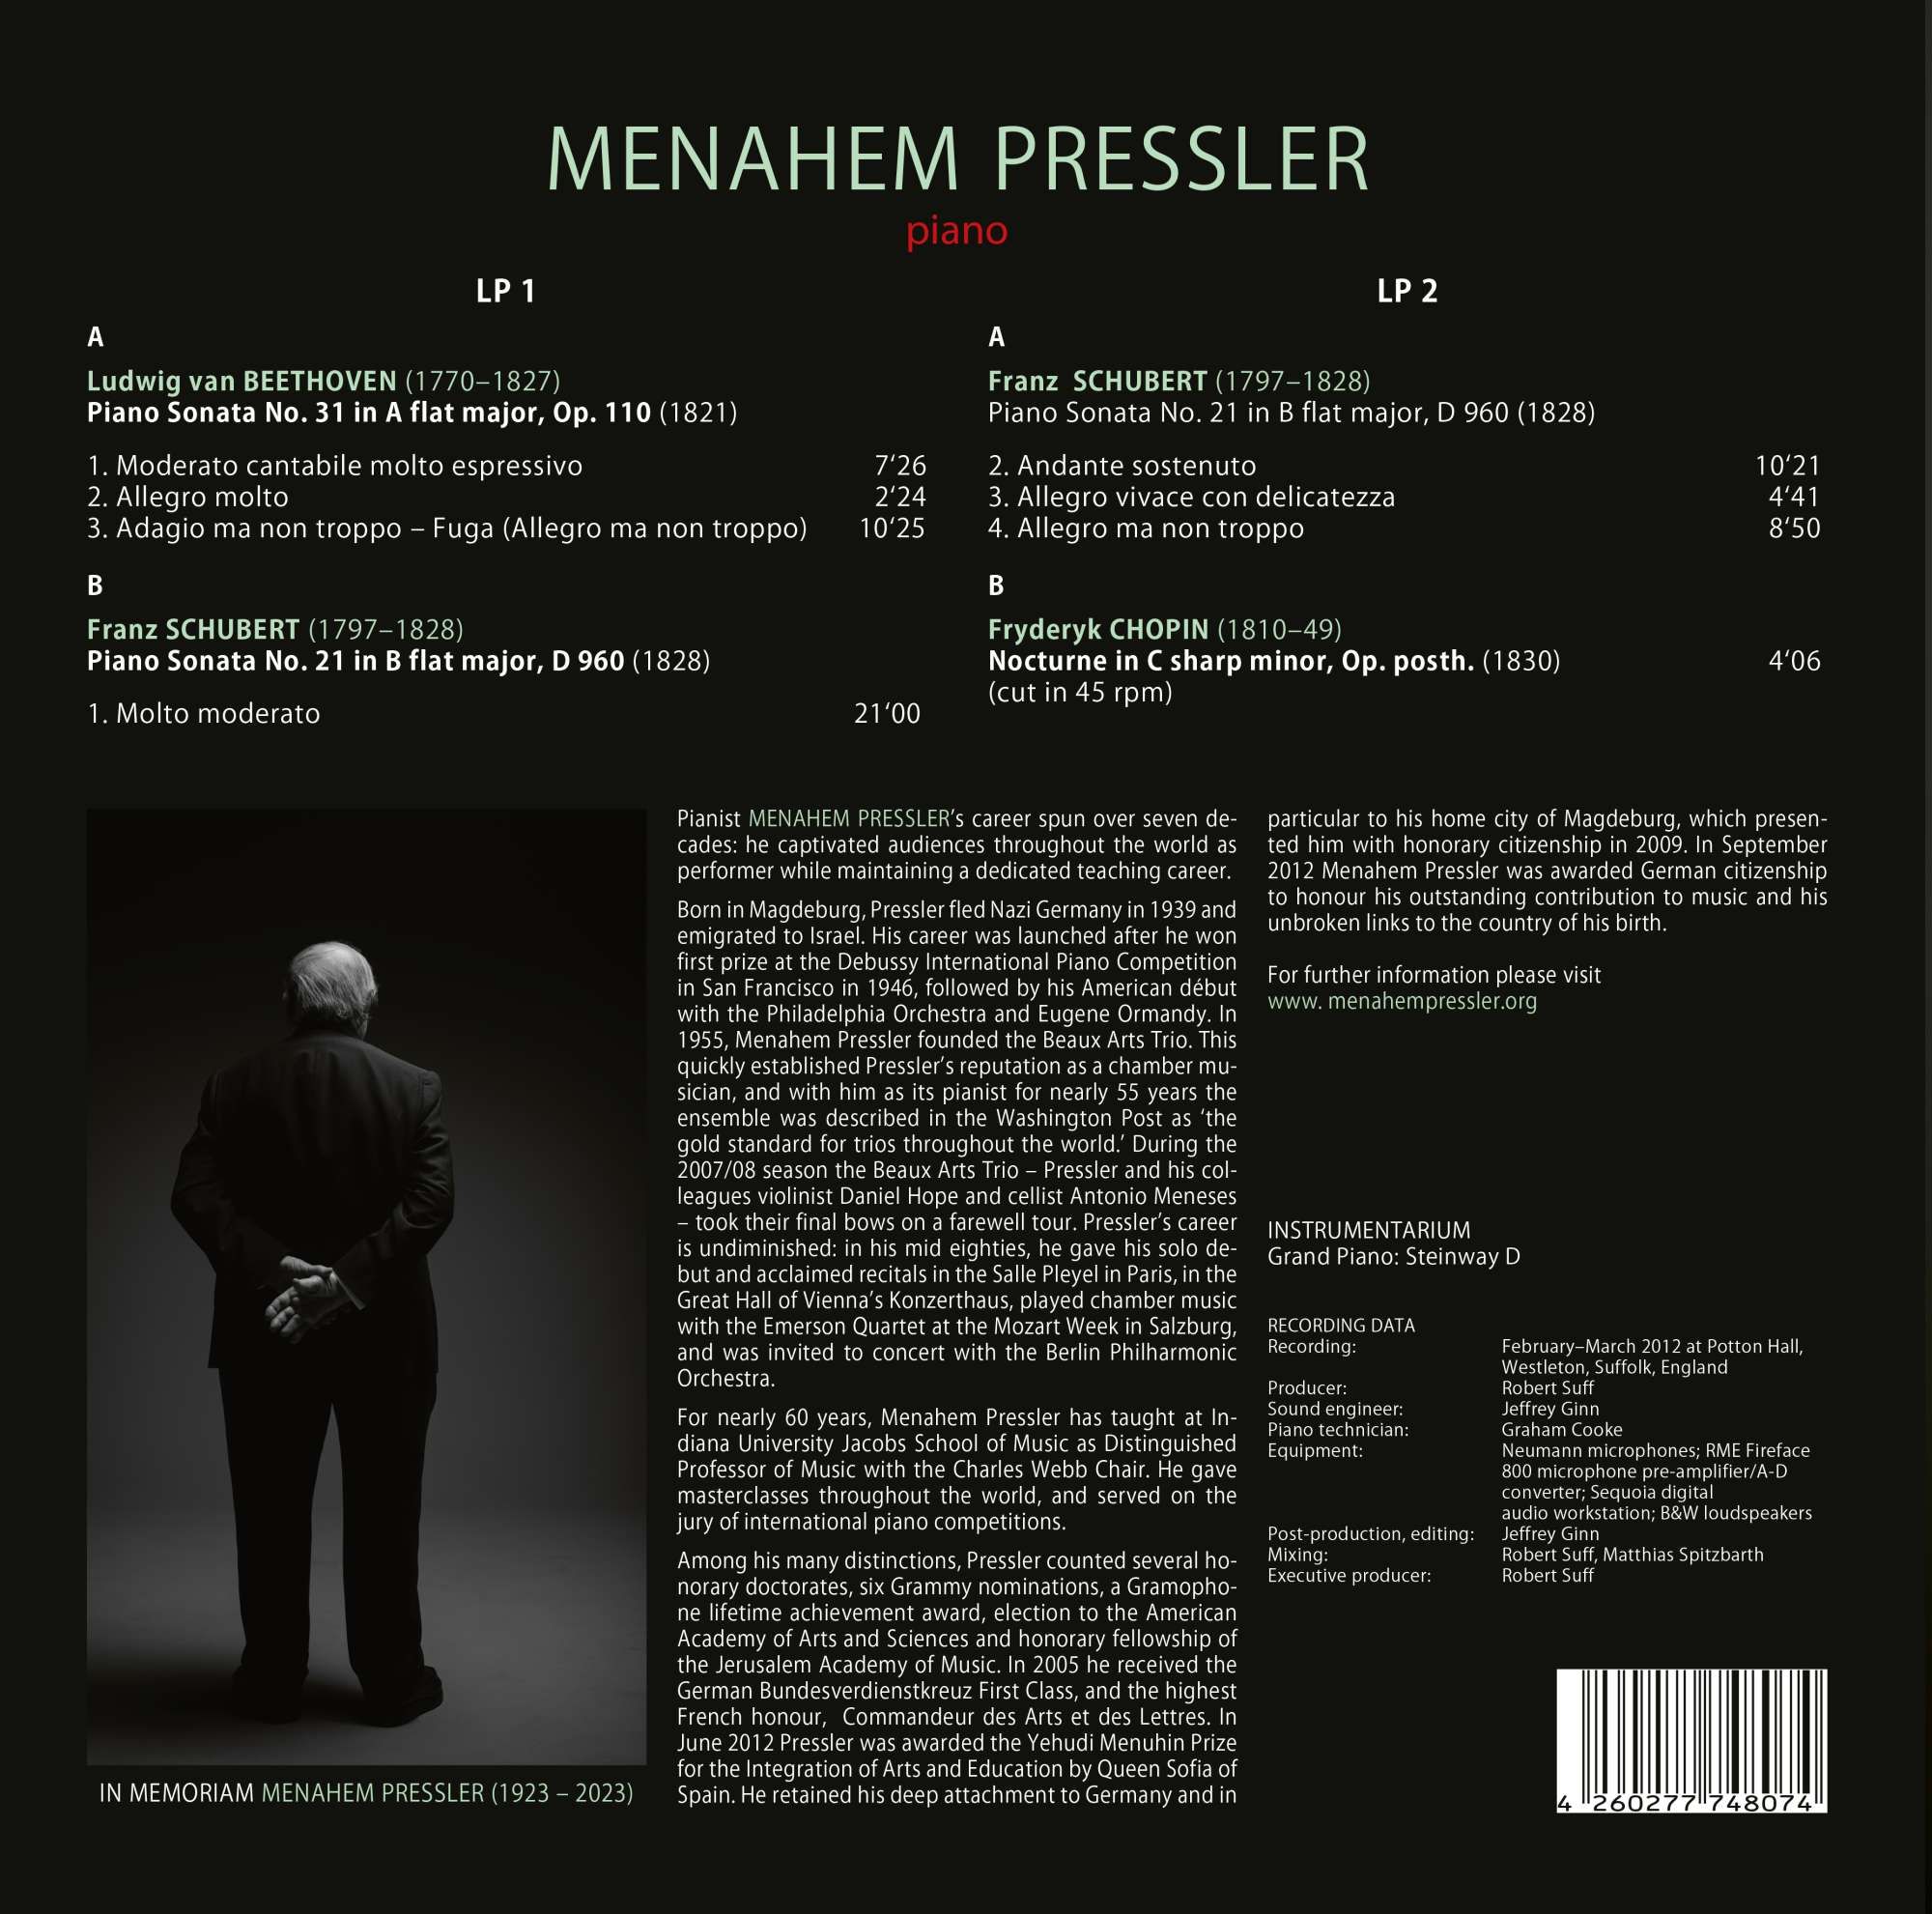 Menahem Pressler 베토벤 / 슈베르트 / 쇼팽: 피아노 및 기타 건반악기를 위한 음악 (Beethoven / Schubert / Chopin) [2LP]